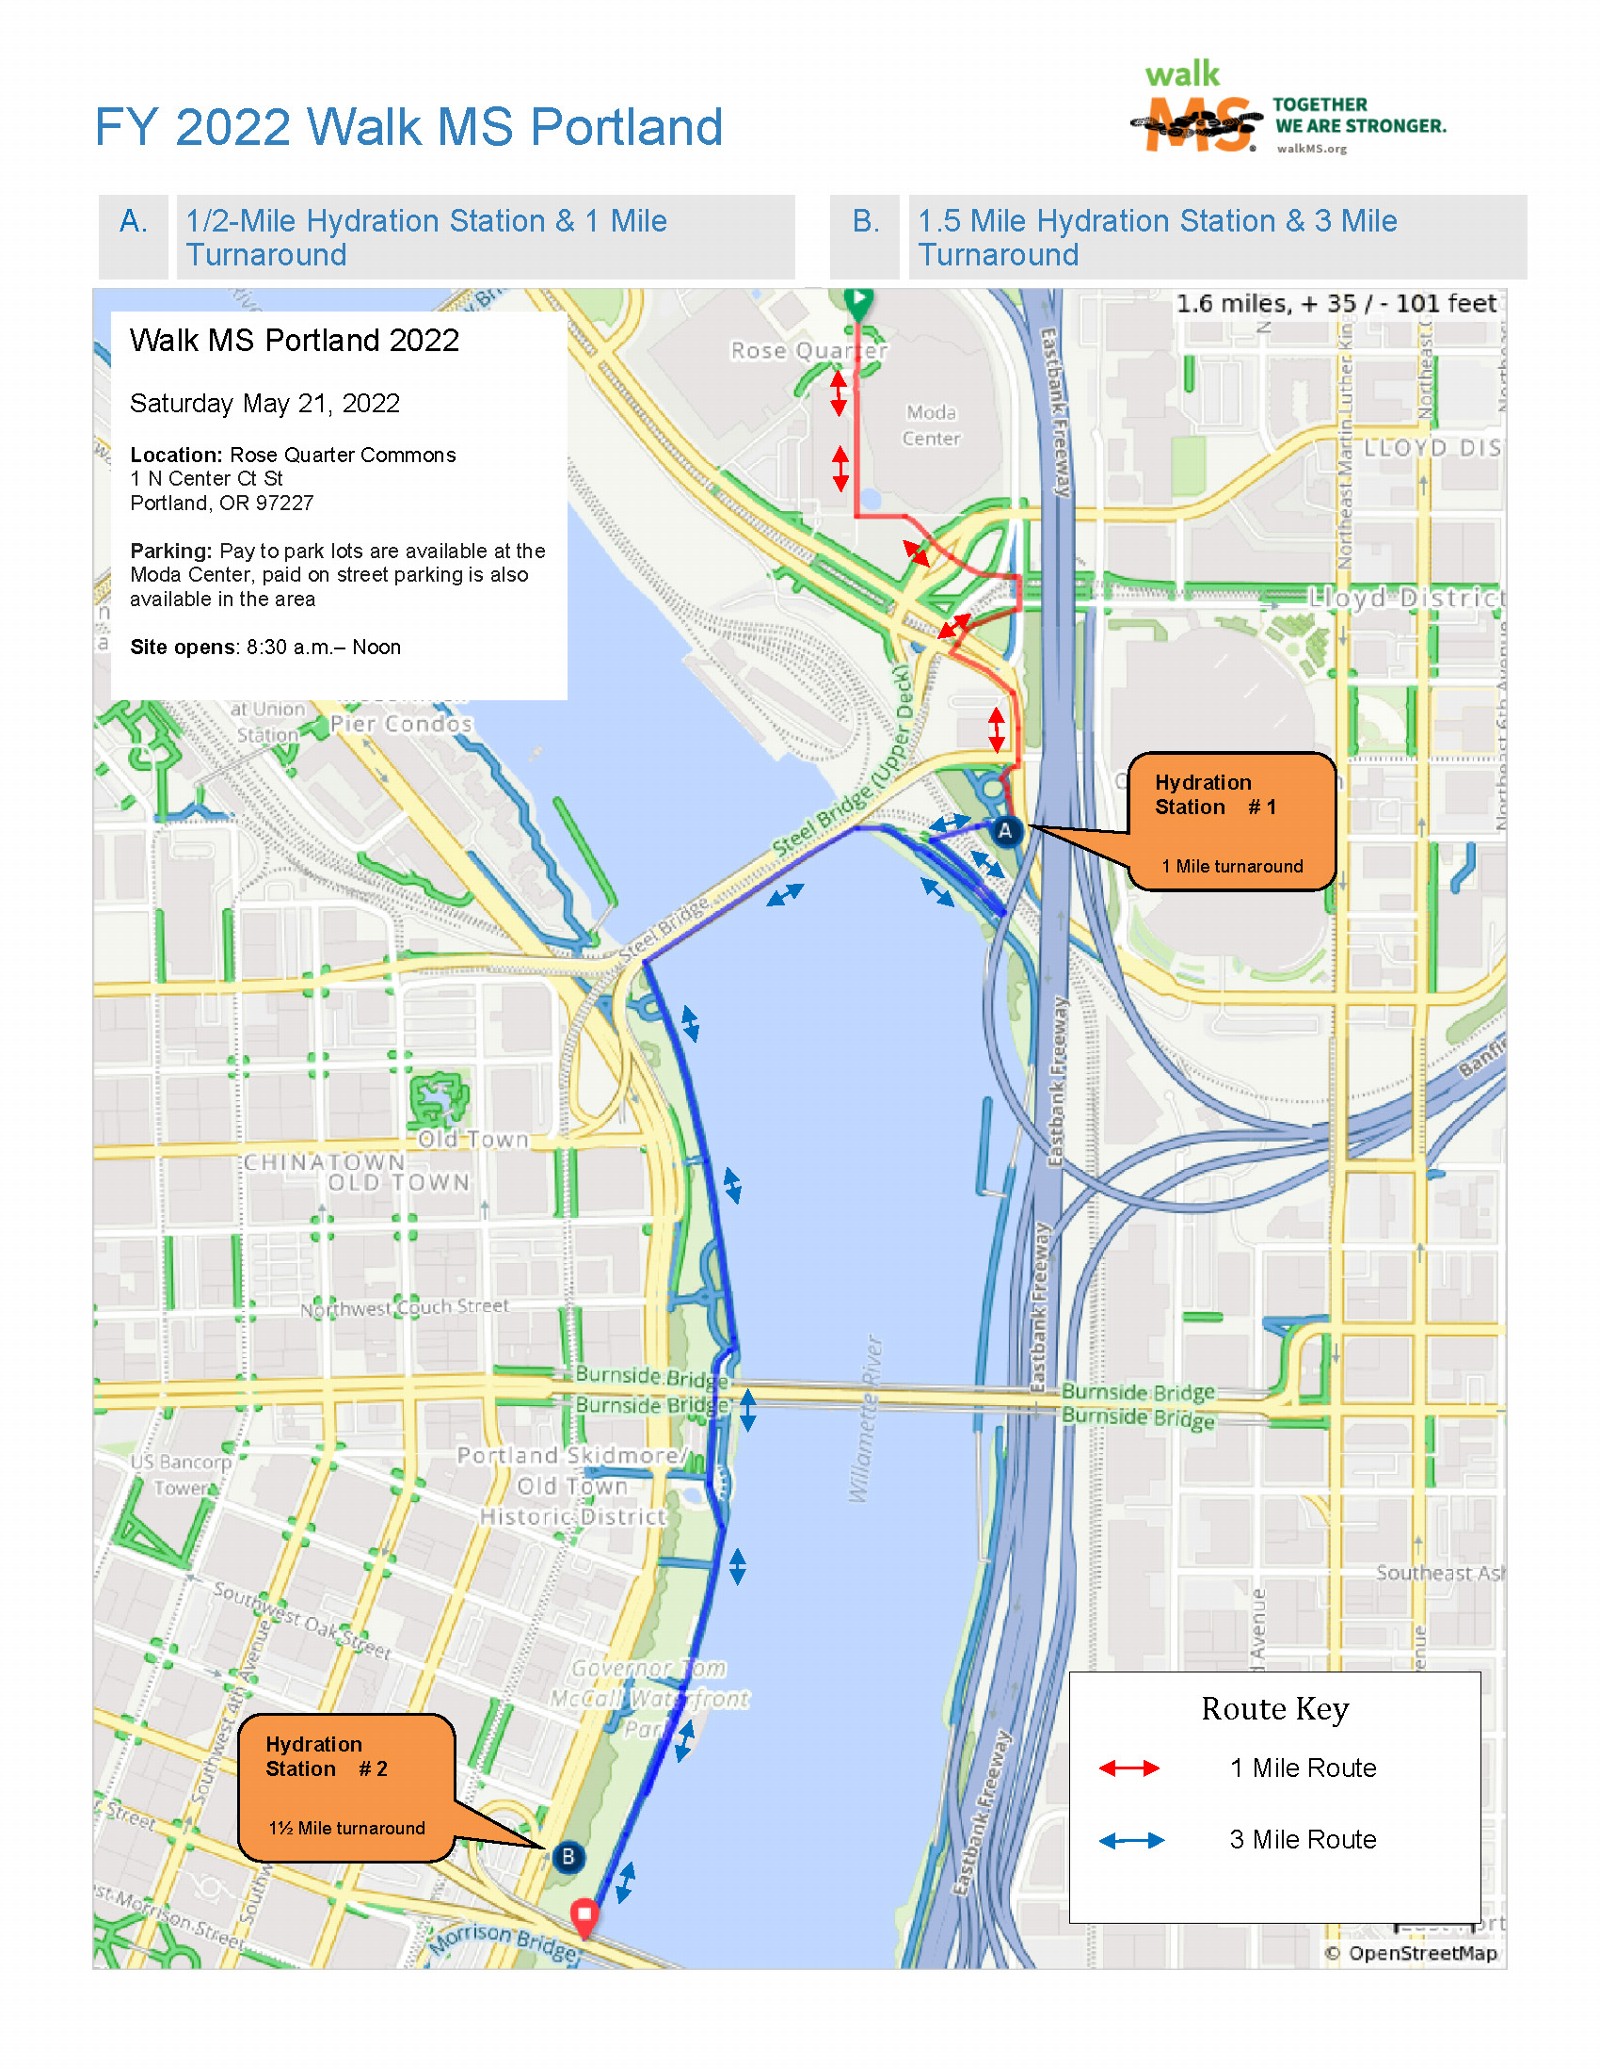 Walk MS: Portland 2022 route map